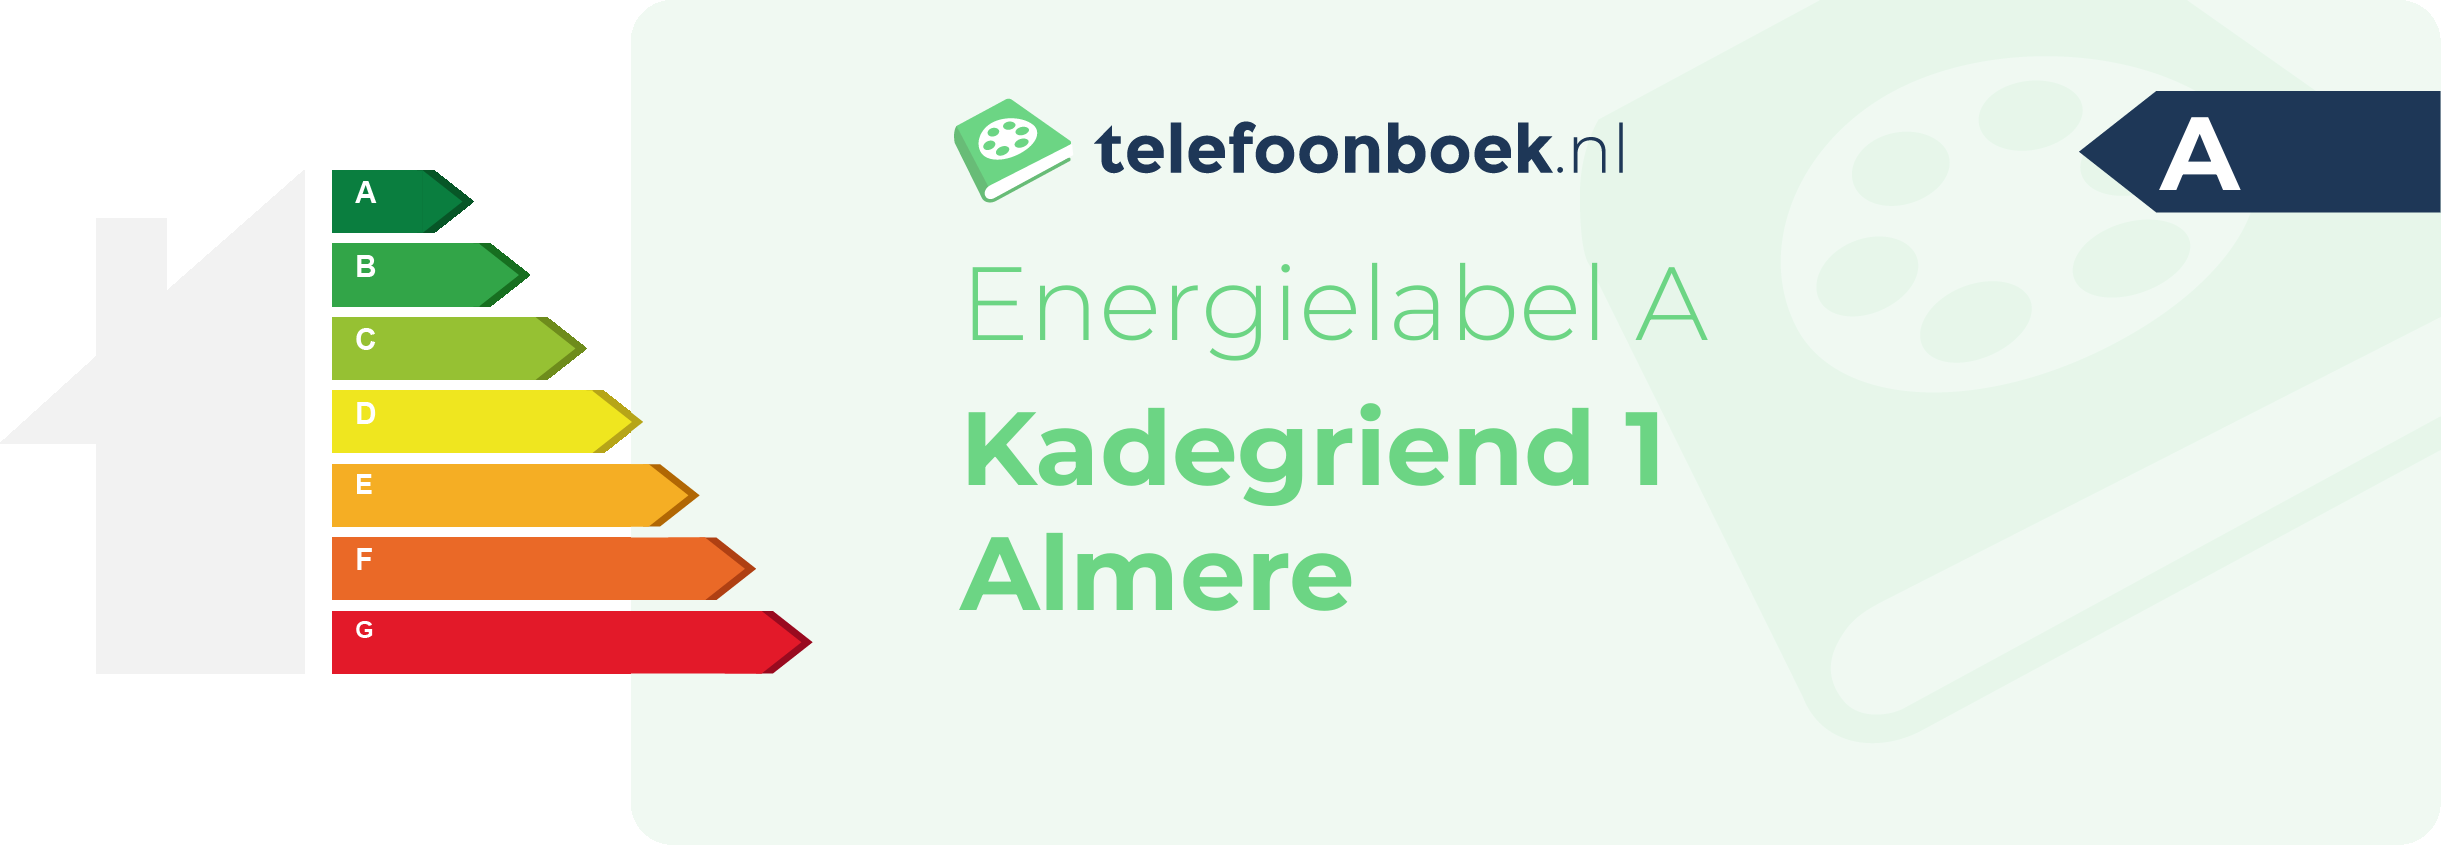 Energielabel Kadegriend 1 Almere